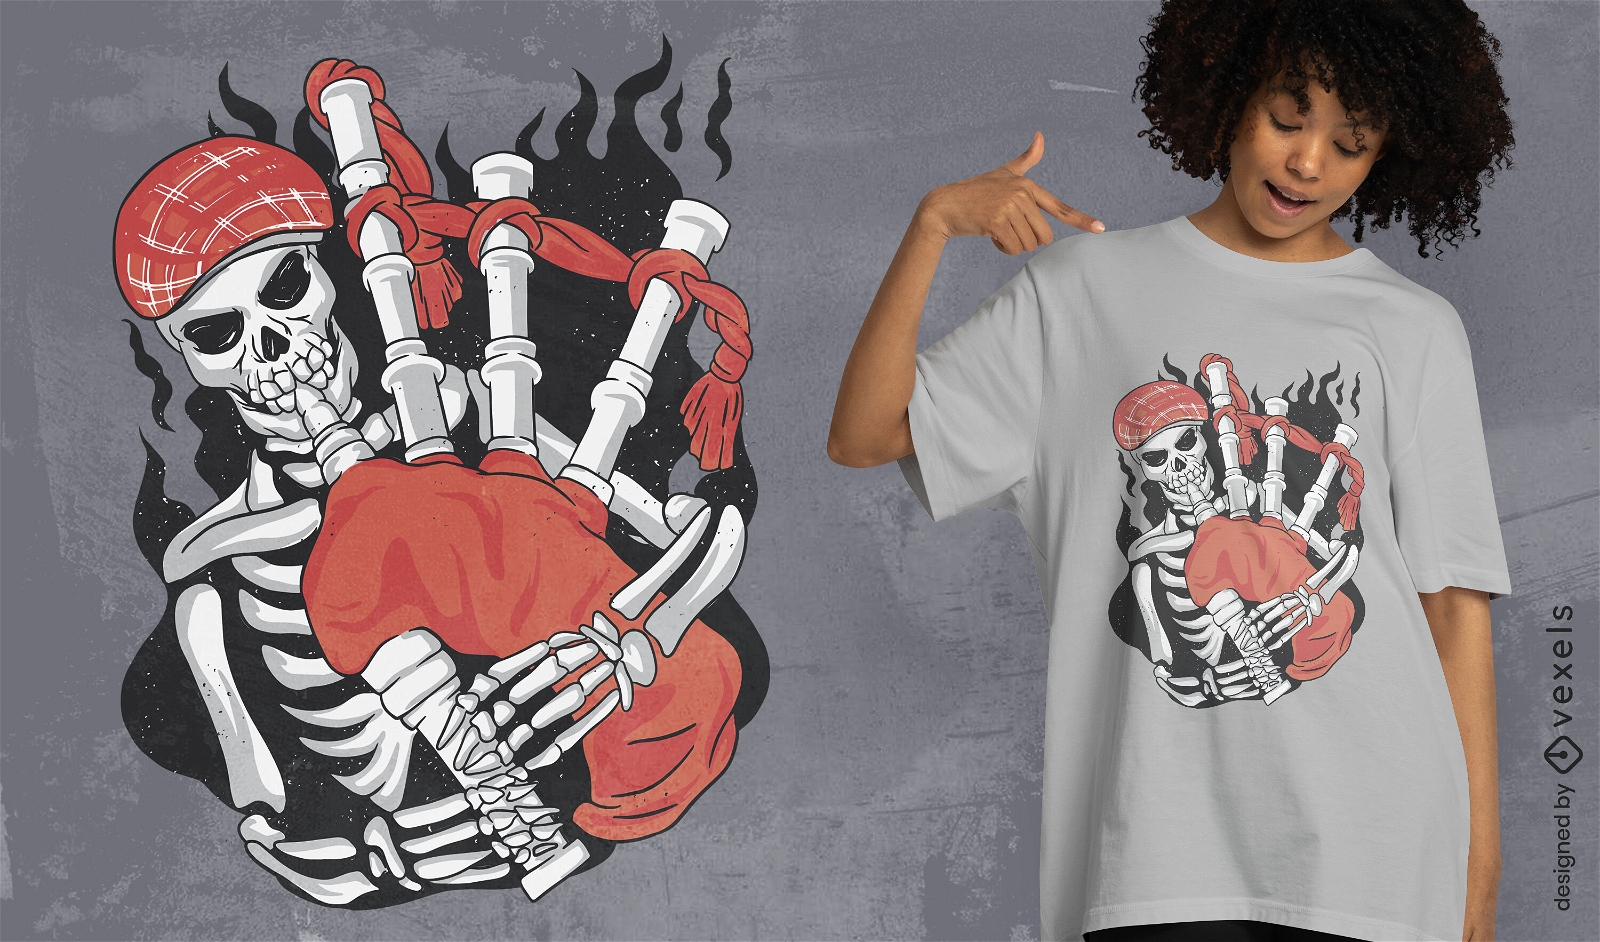 Scottish skeleton t-shirt design